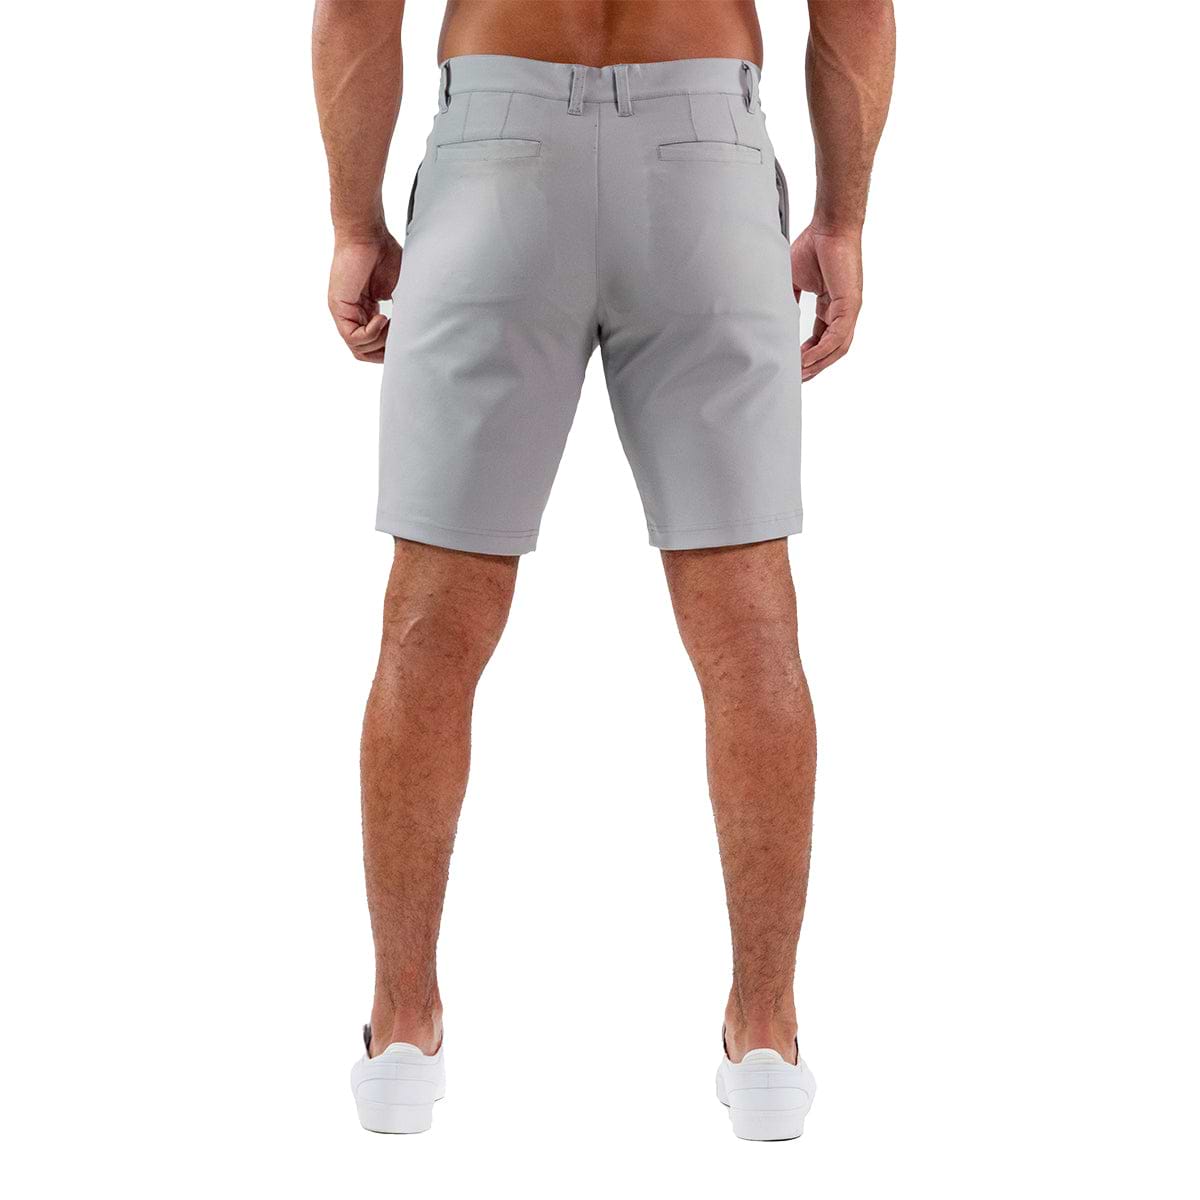 Athletic Fit Shorts - Light Grey